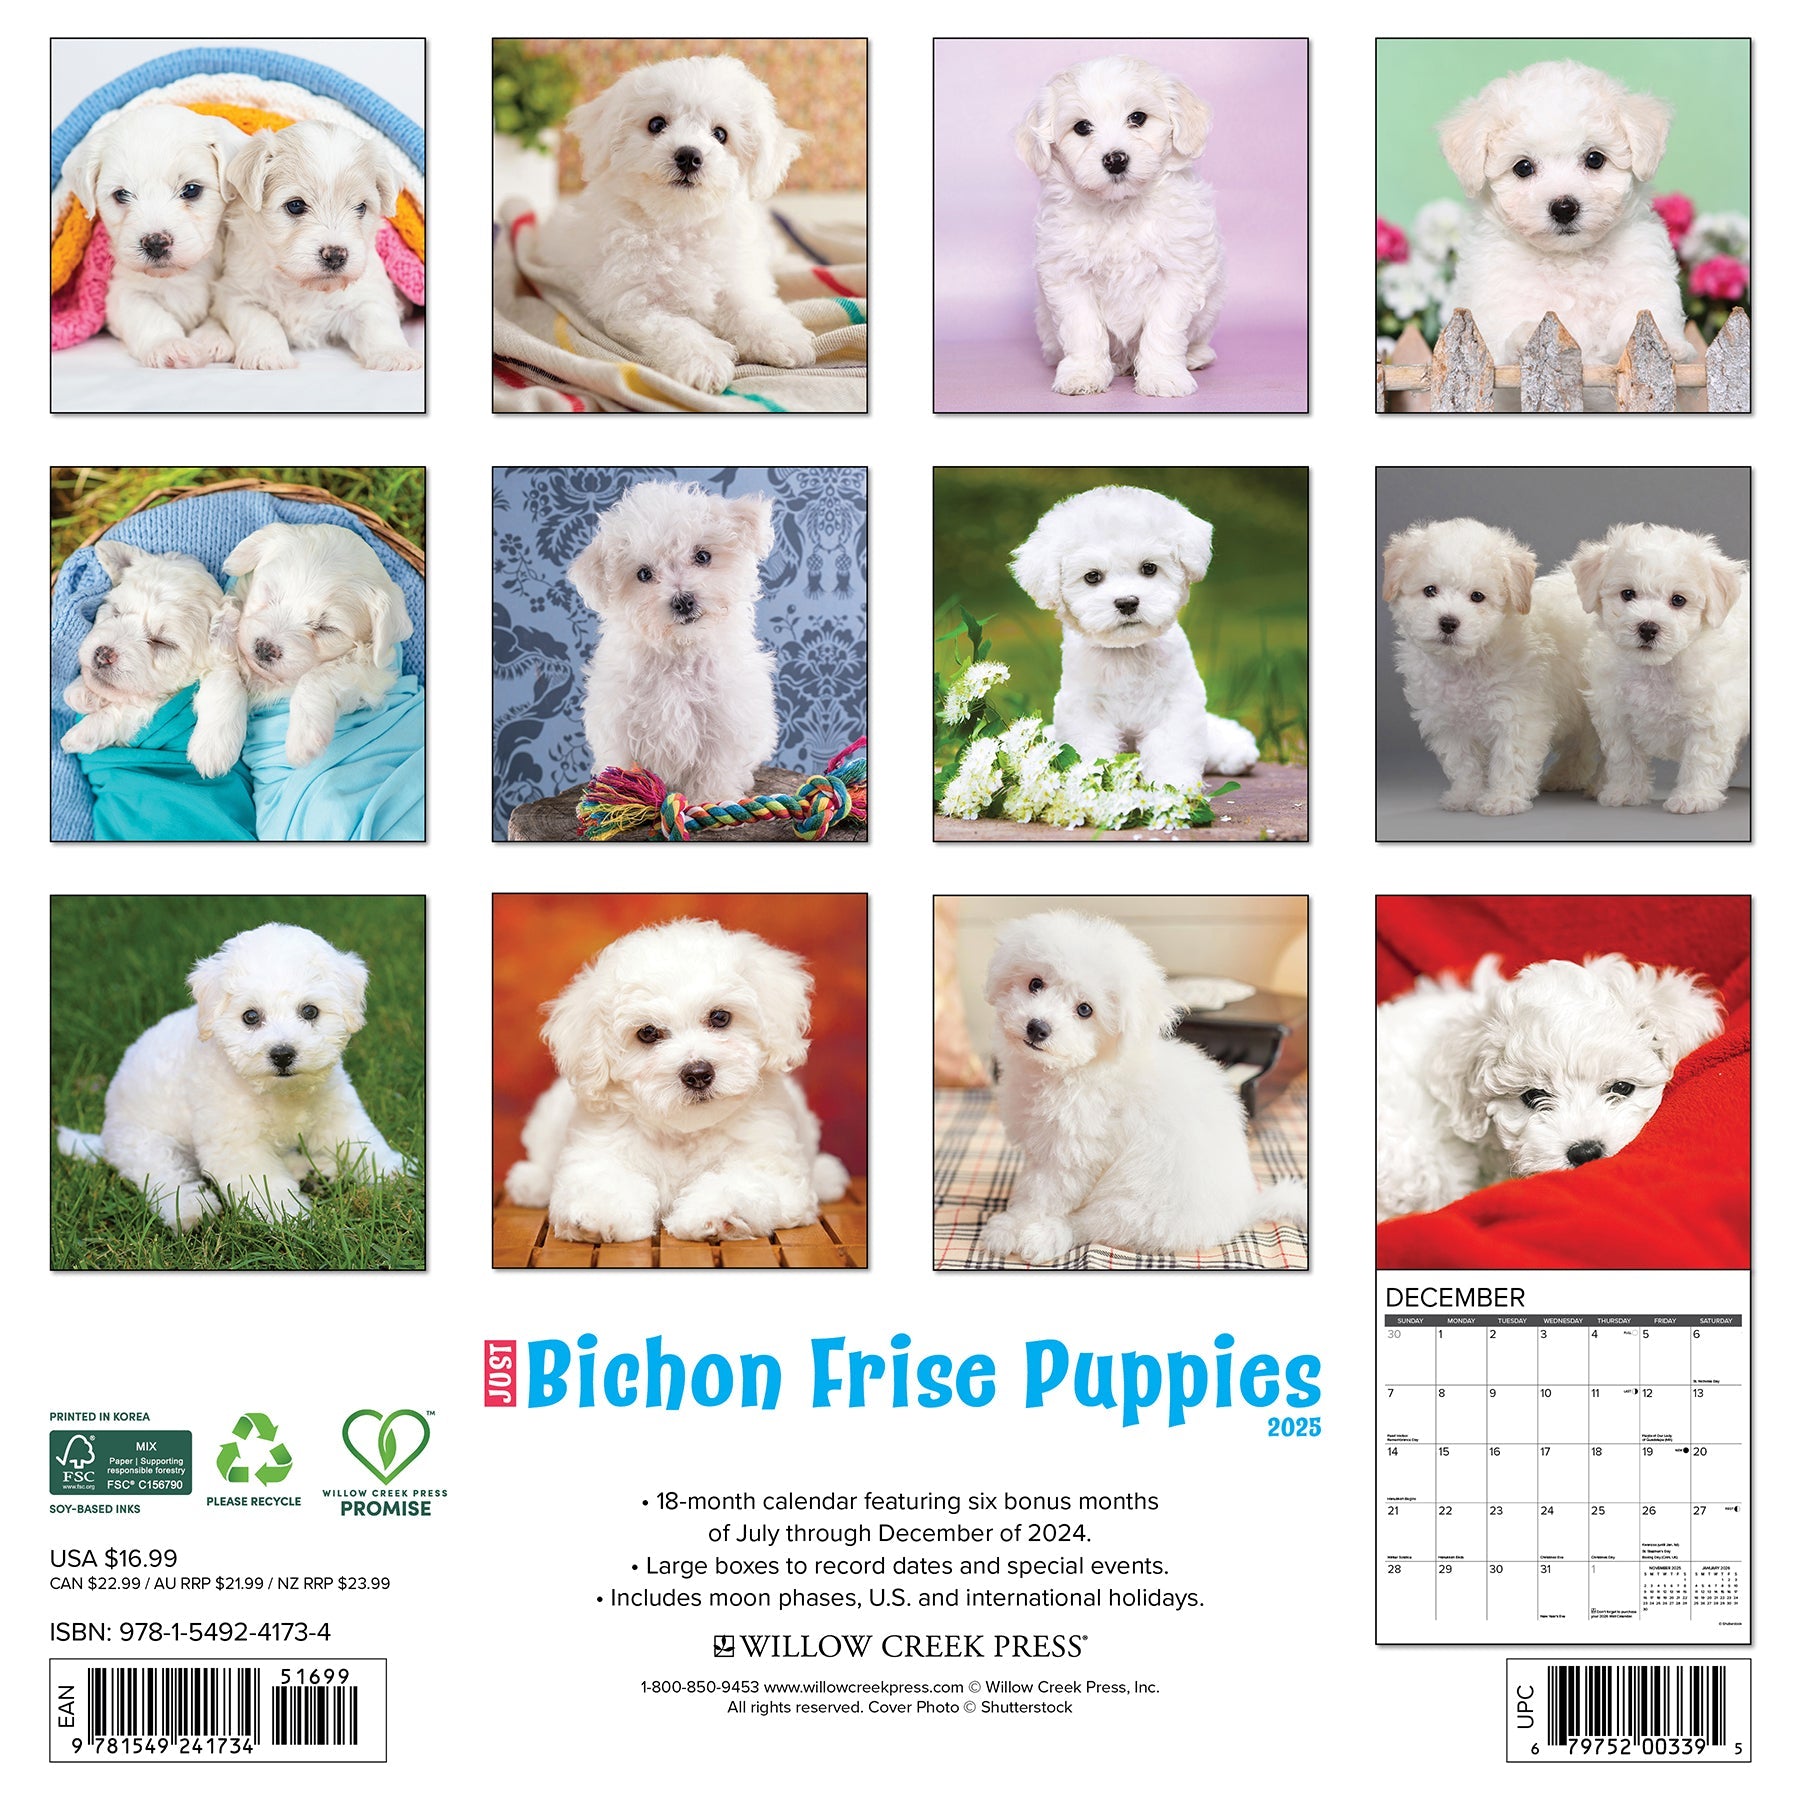 2025 Bichon Frise Puppies - Square Wall Calendar